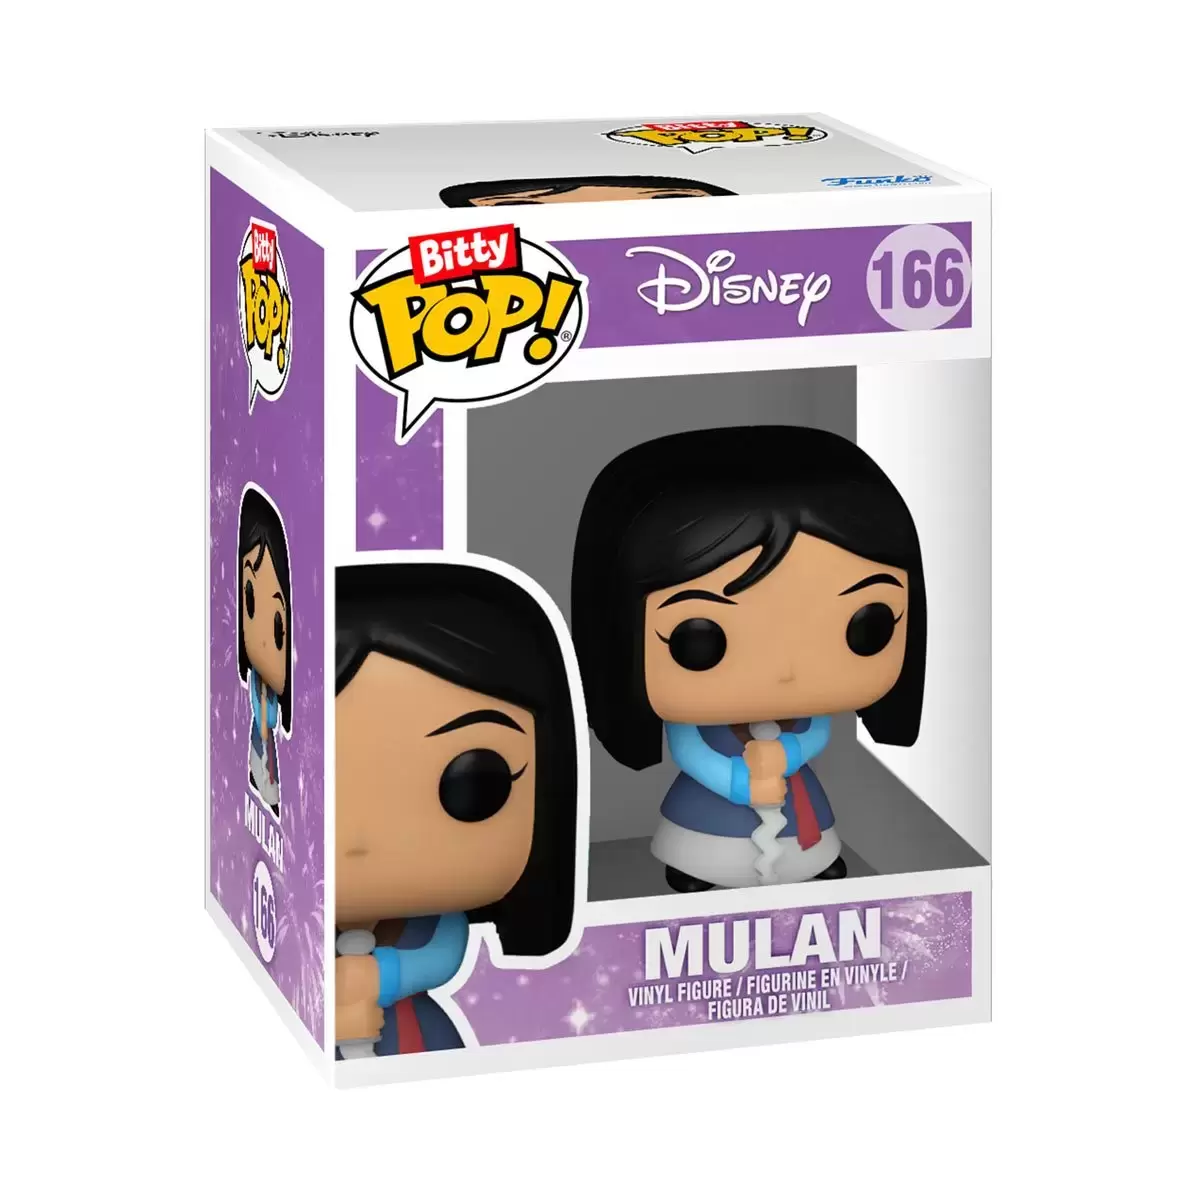 Bitty POP! - Disney Princess - Mulan